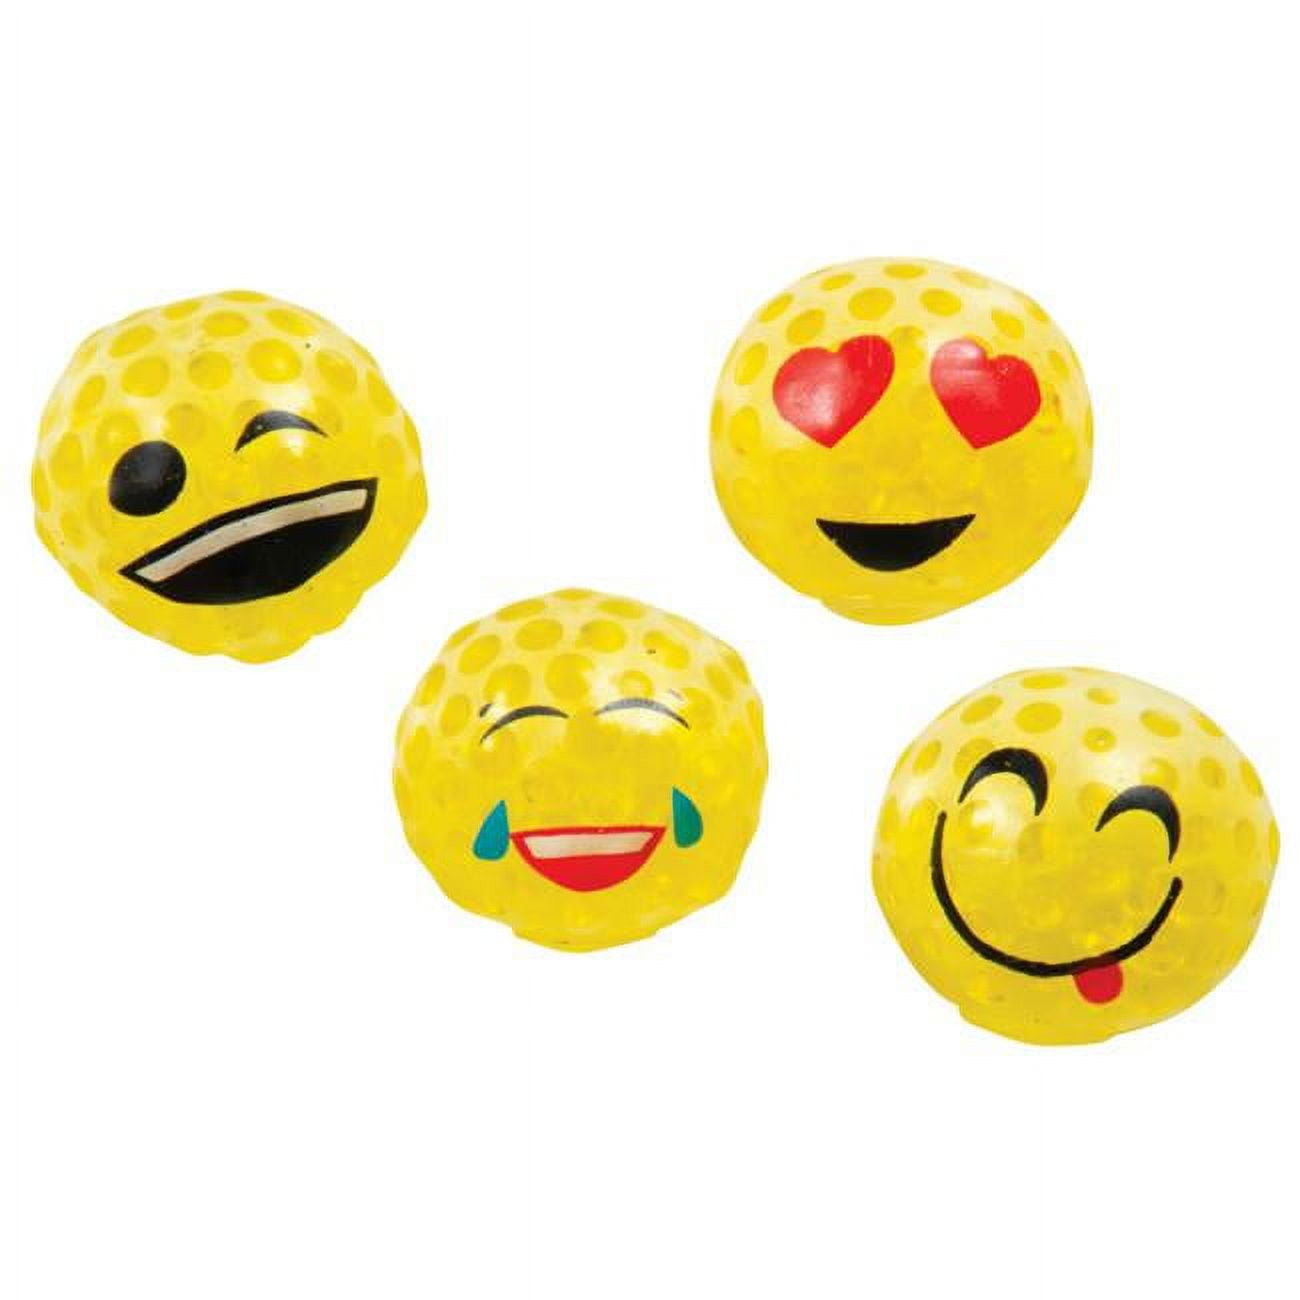 2339332 2 In. Emoji Blobbles Toys, Assorted Design - Case Of 48